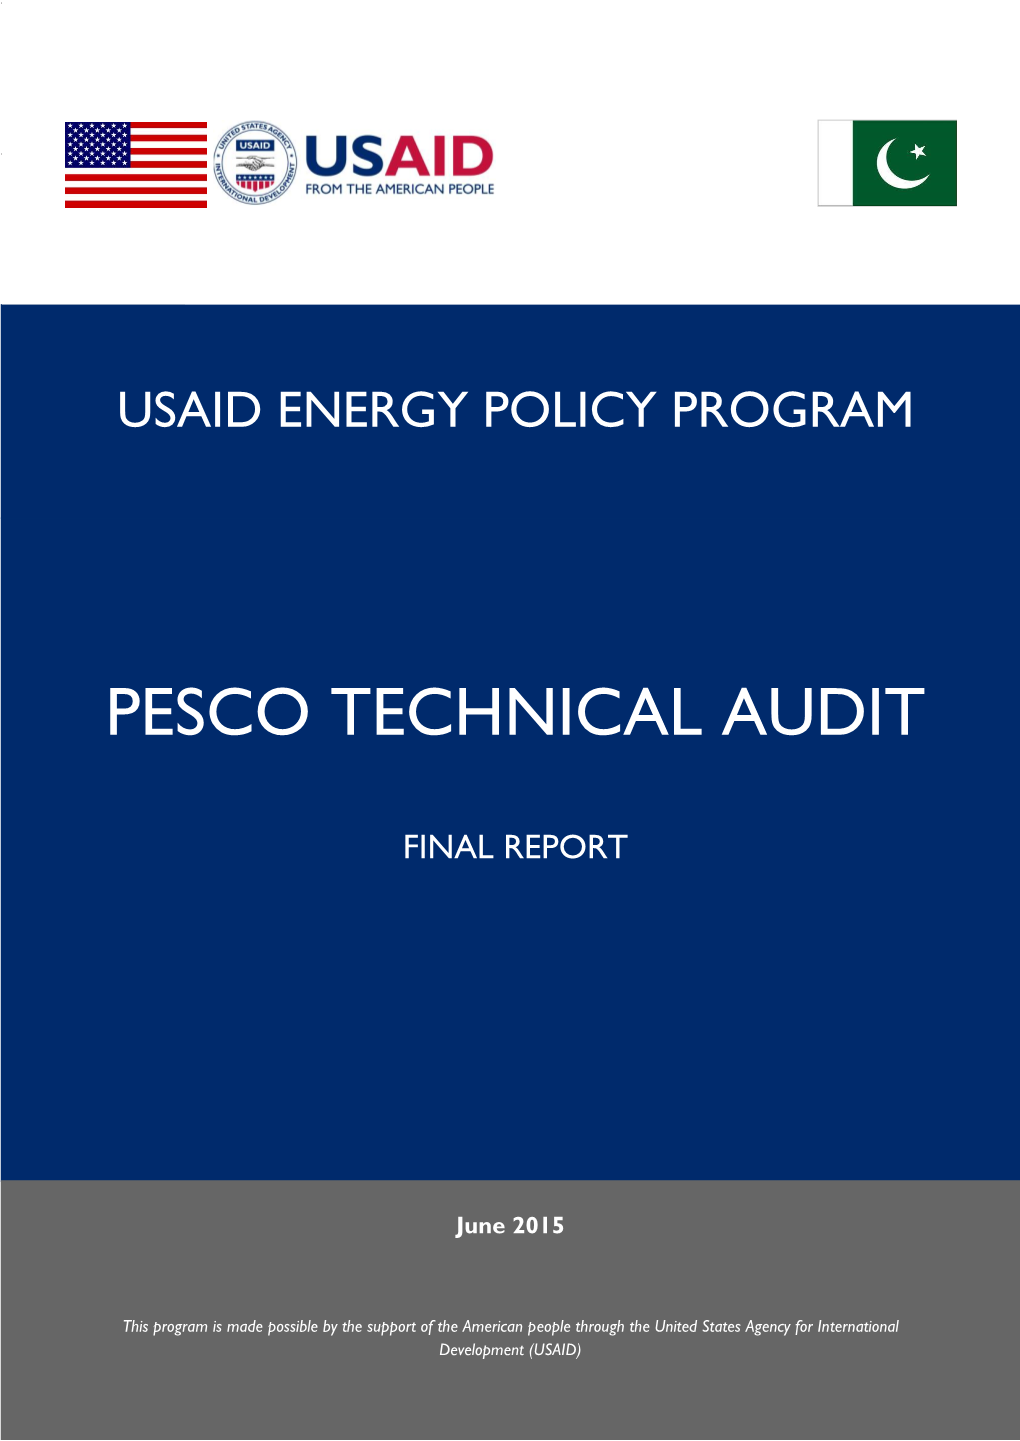 Pesco Technical Audit